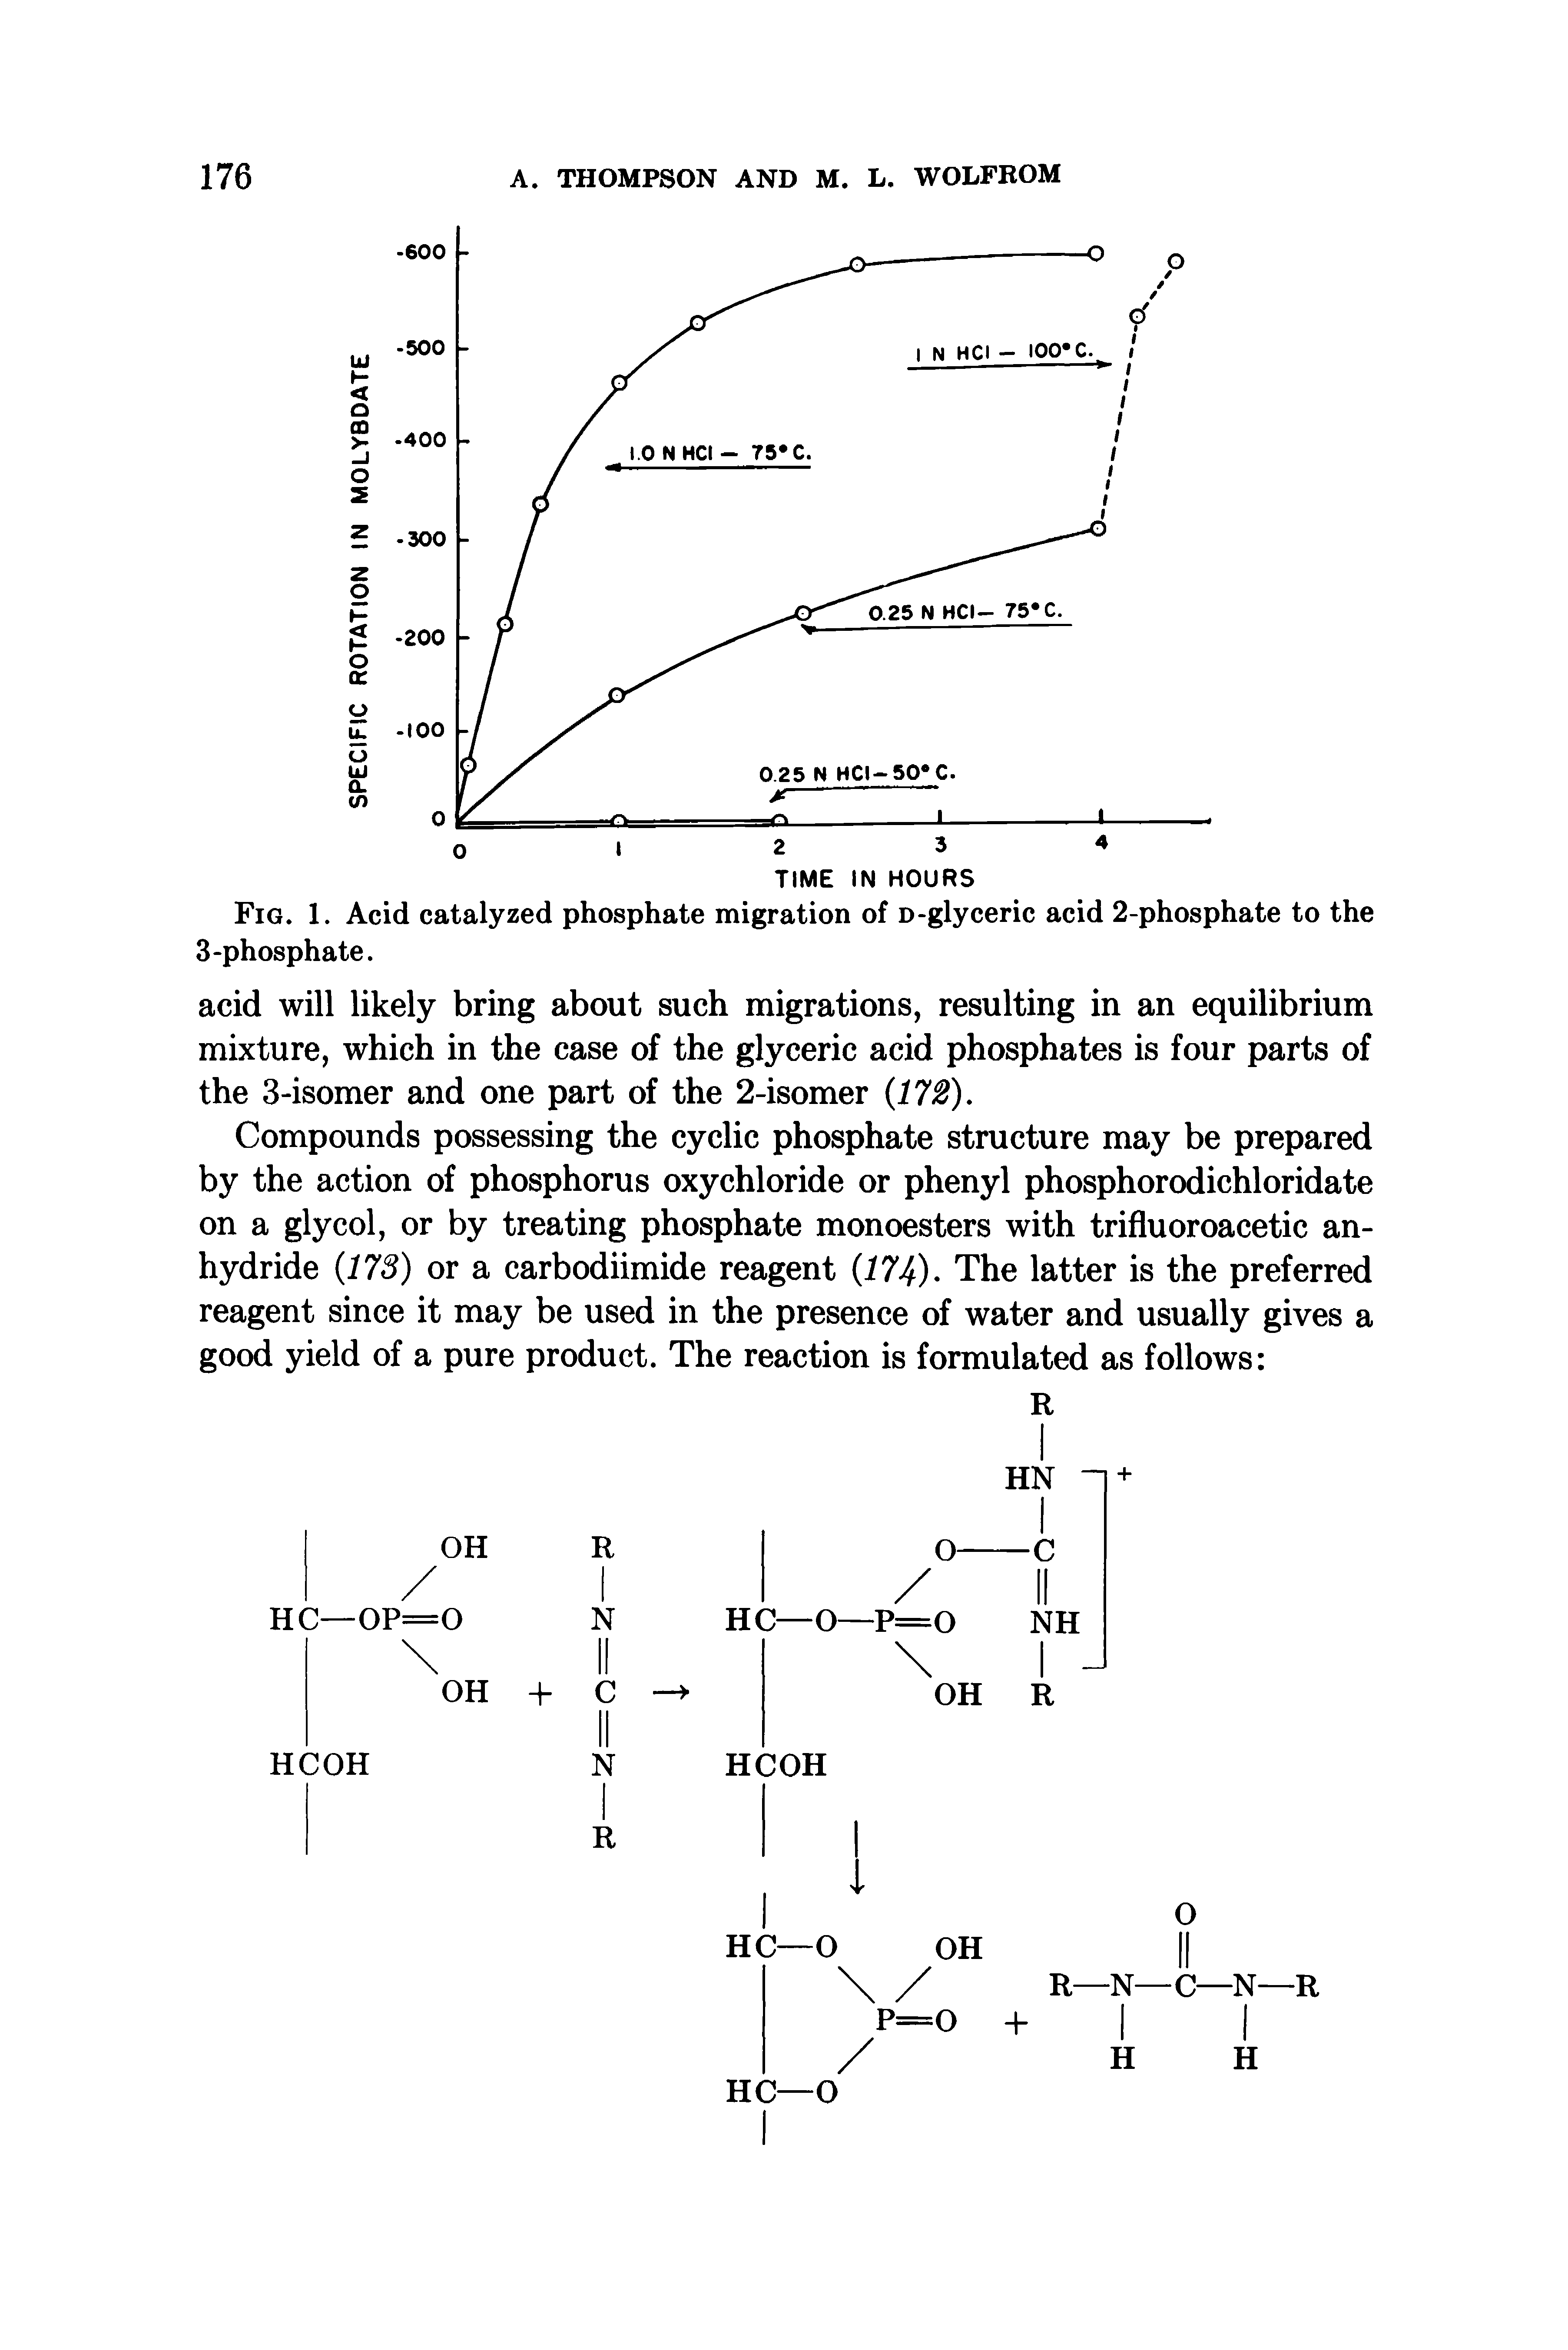 Fig. 1. Acid catalyzed phosphate migration of D-glyceric acid 2-phosphate to the 3-phosphate.